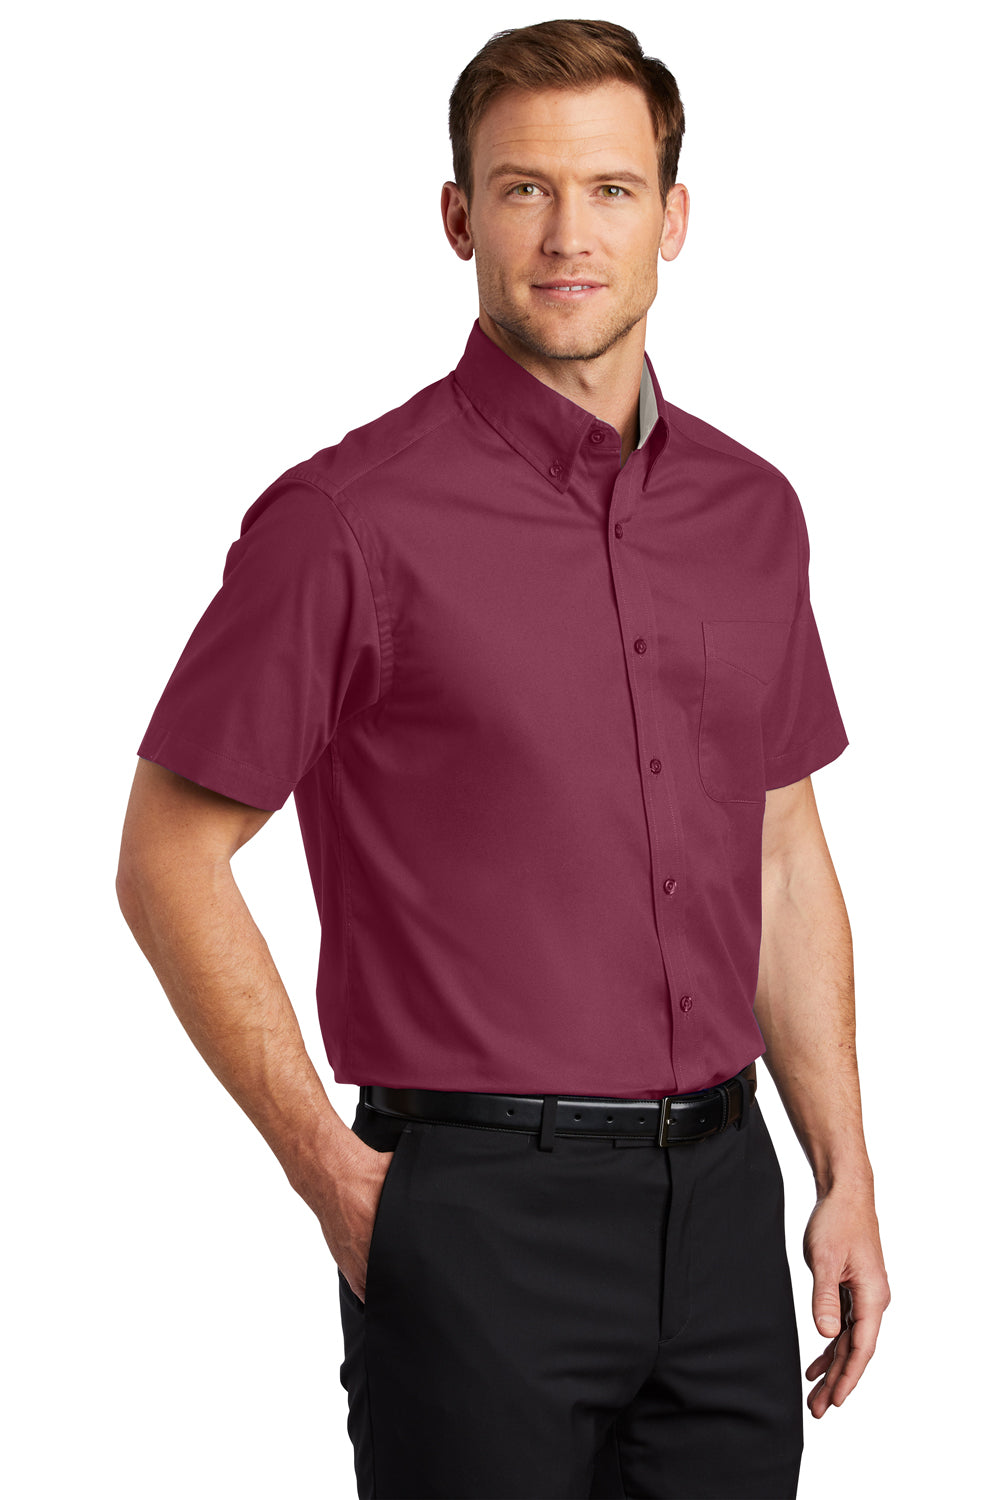 Port Authority S508/TLS508 Mens Easy Care Wrinkle Resistant Short Sleeve Button Down Shirt w/ Pocket Burgundy 3Q